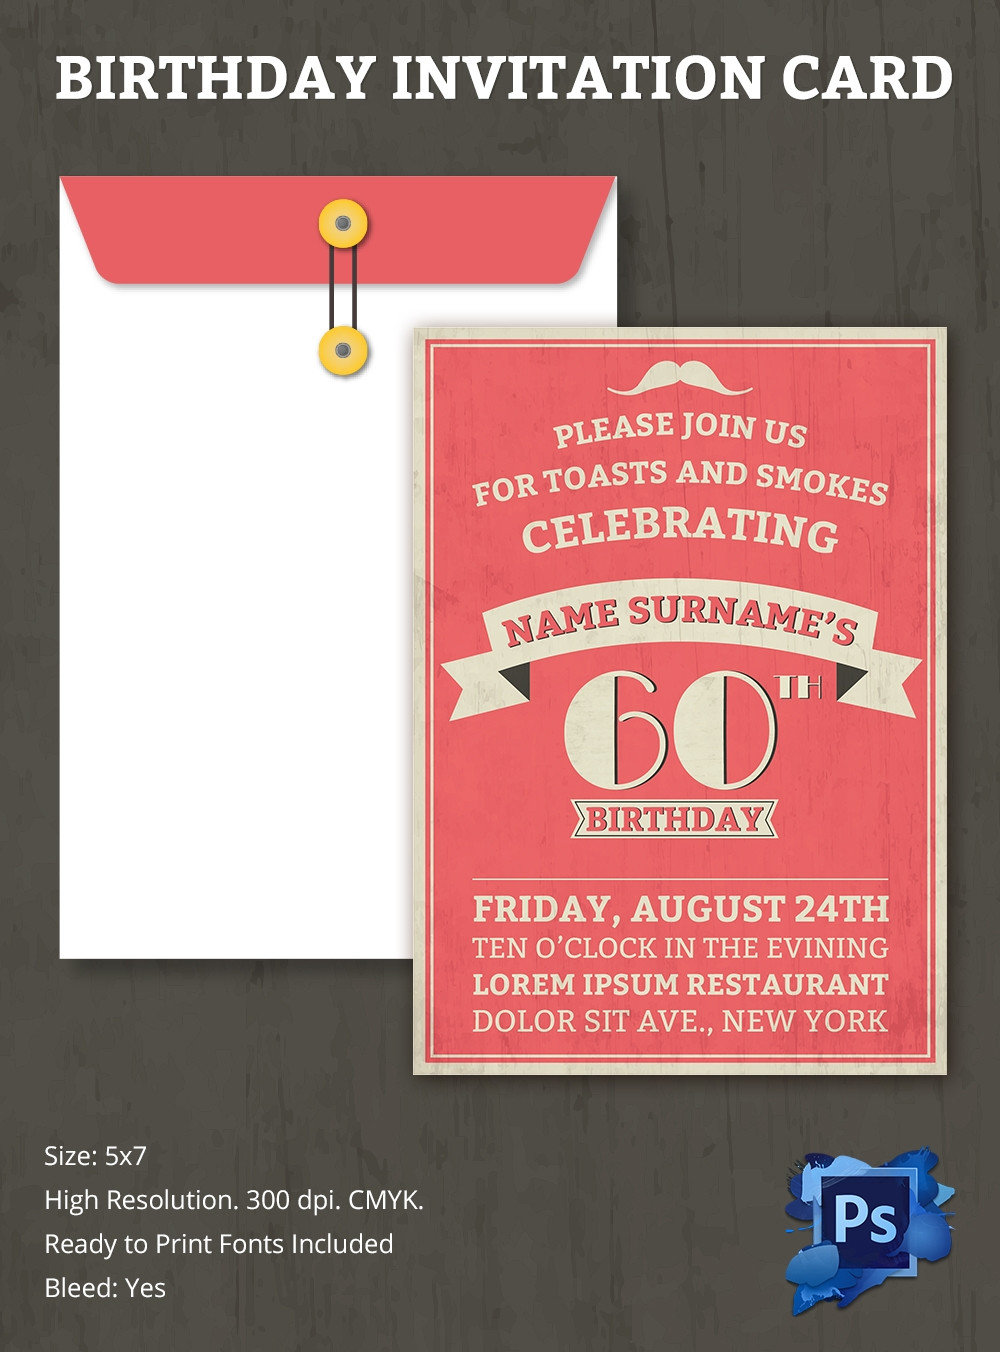 Birthday Card Invitation Templates
 Birthday Invitation Template – 70 Free PSD Format